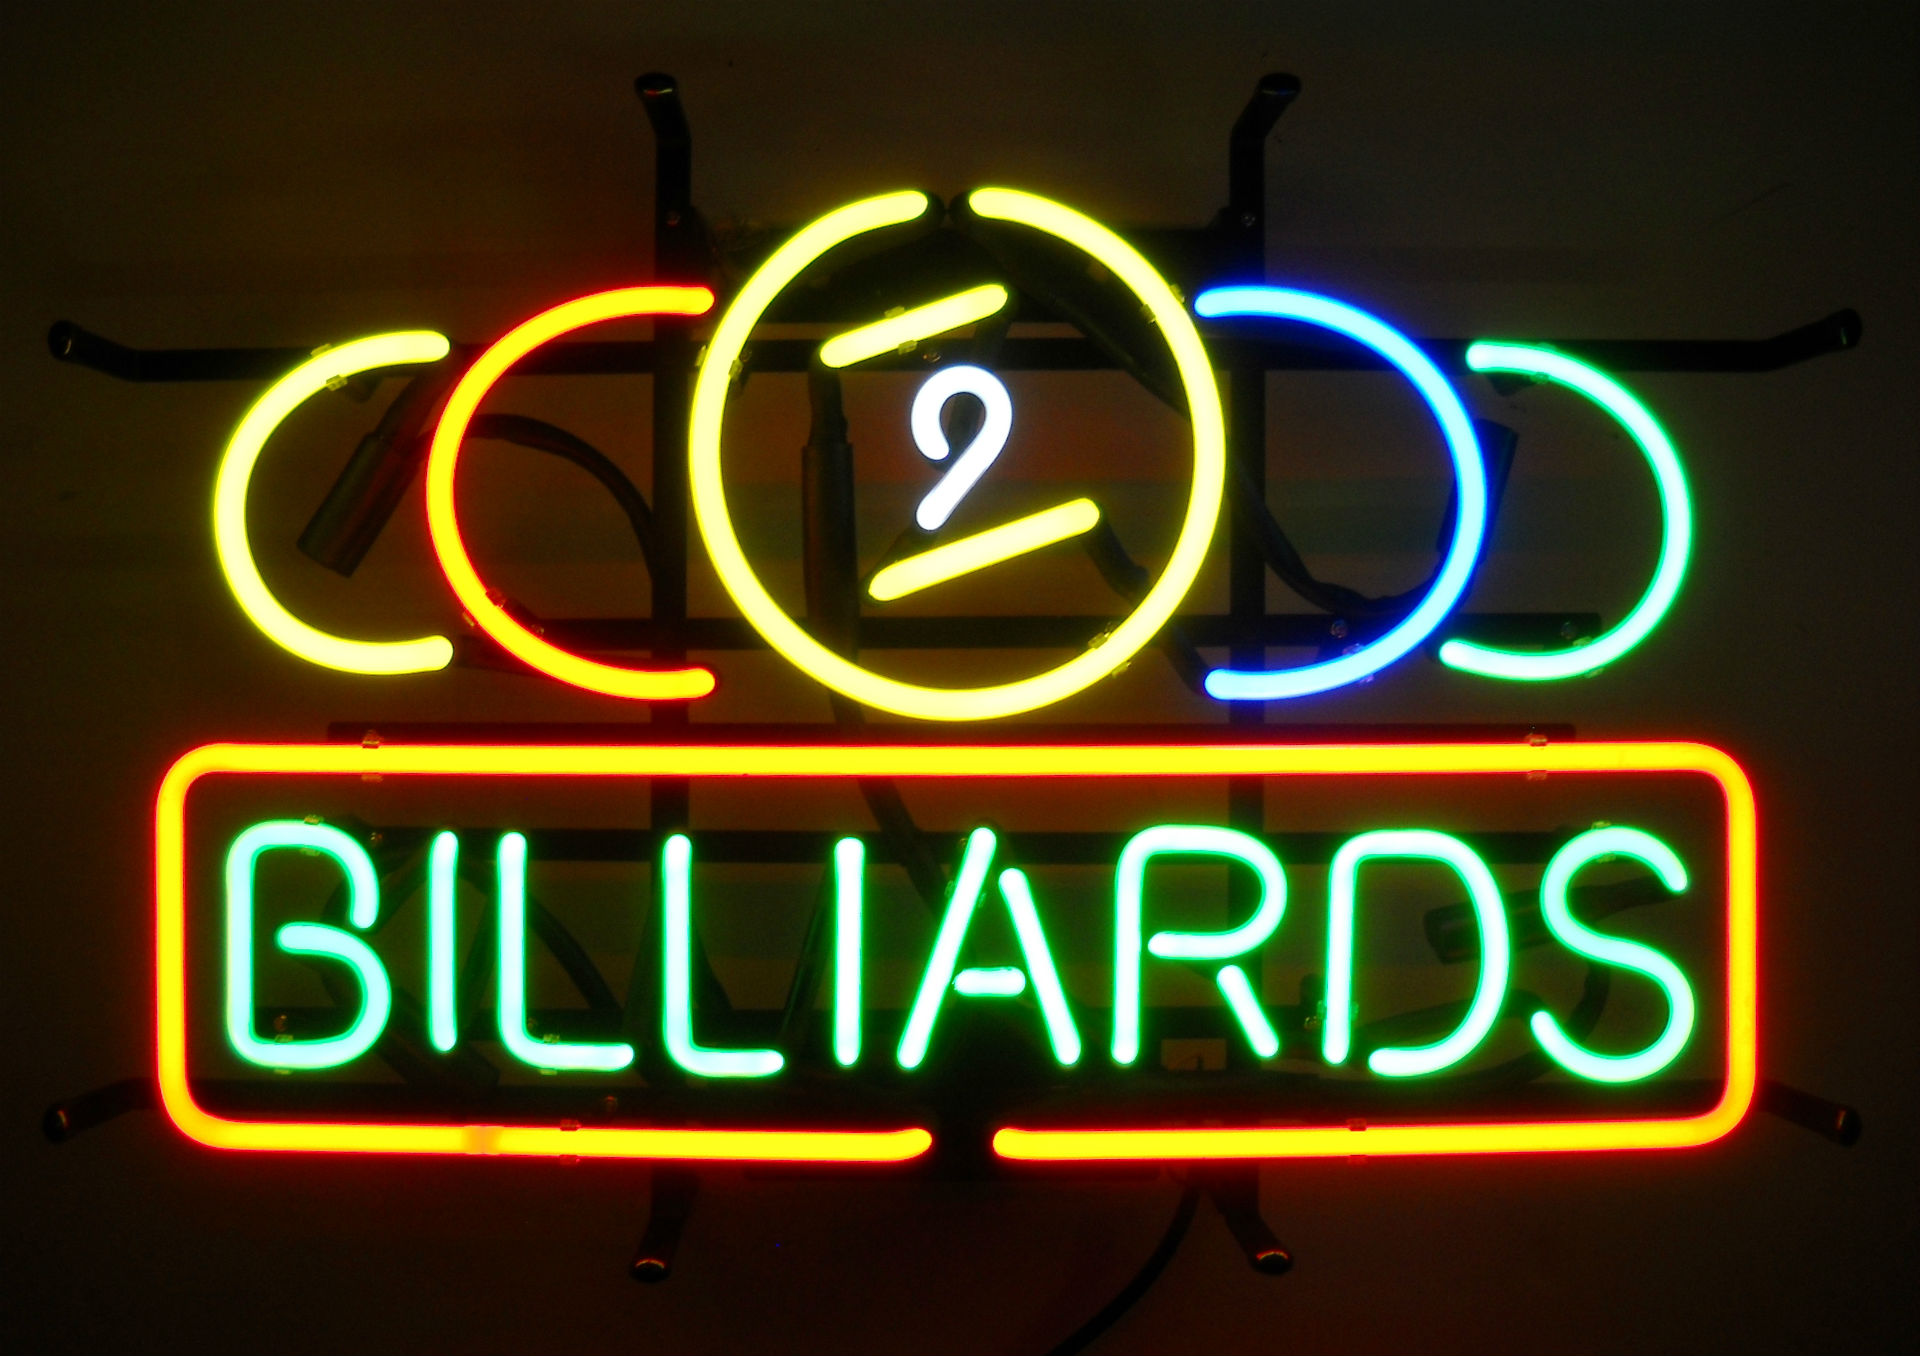 Ball Billiards Neon Sign